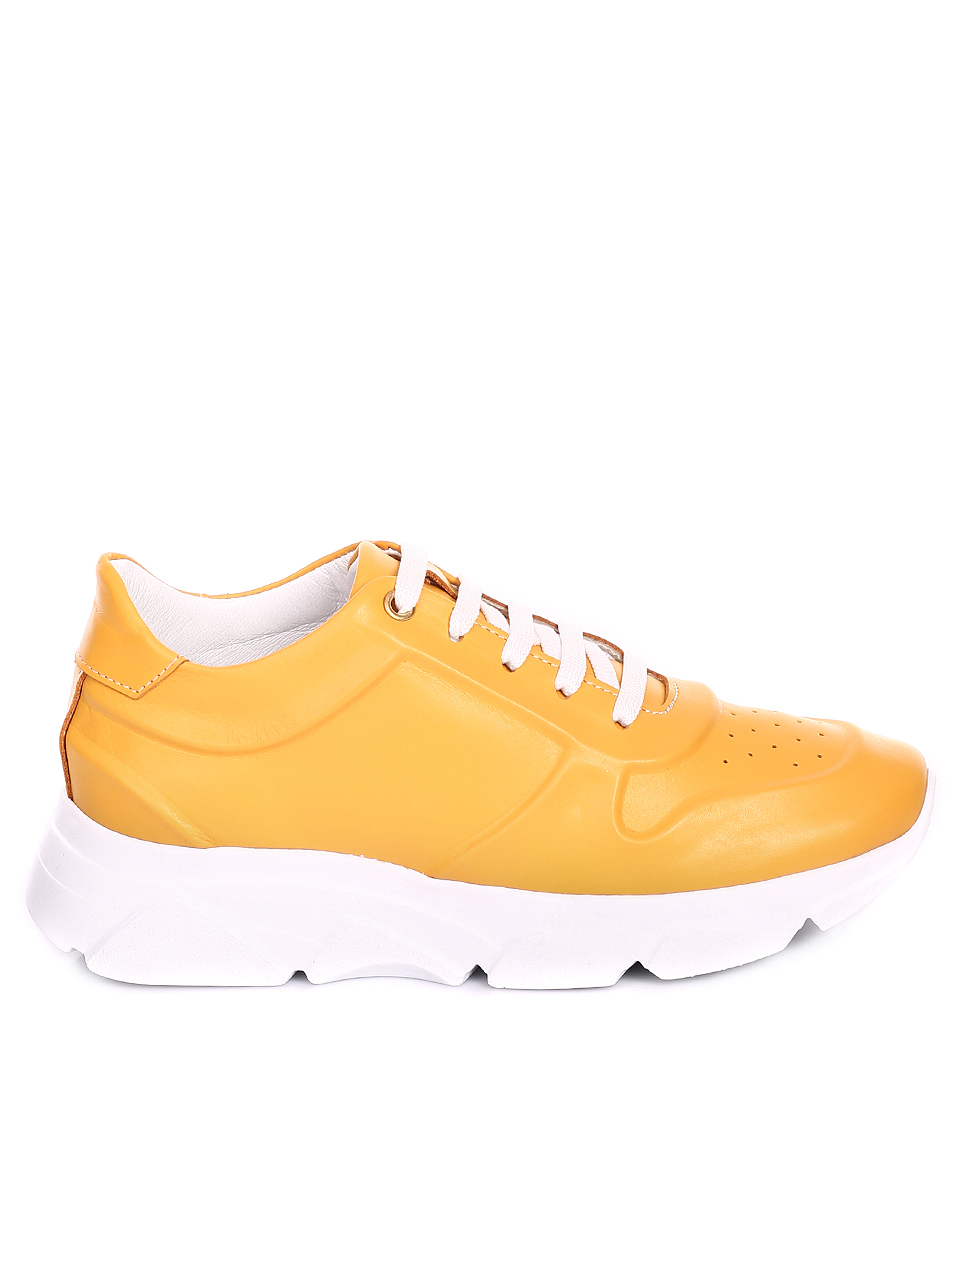 Ежедневни дамски обувки от естествена кожа 3AT-20498 yellow